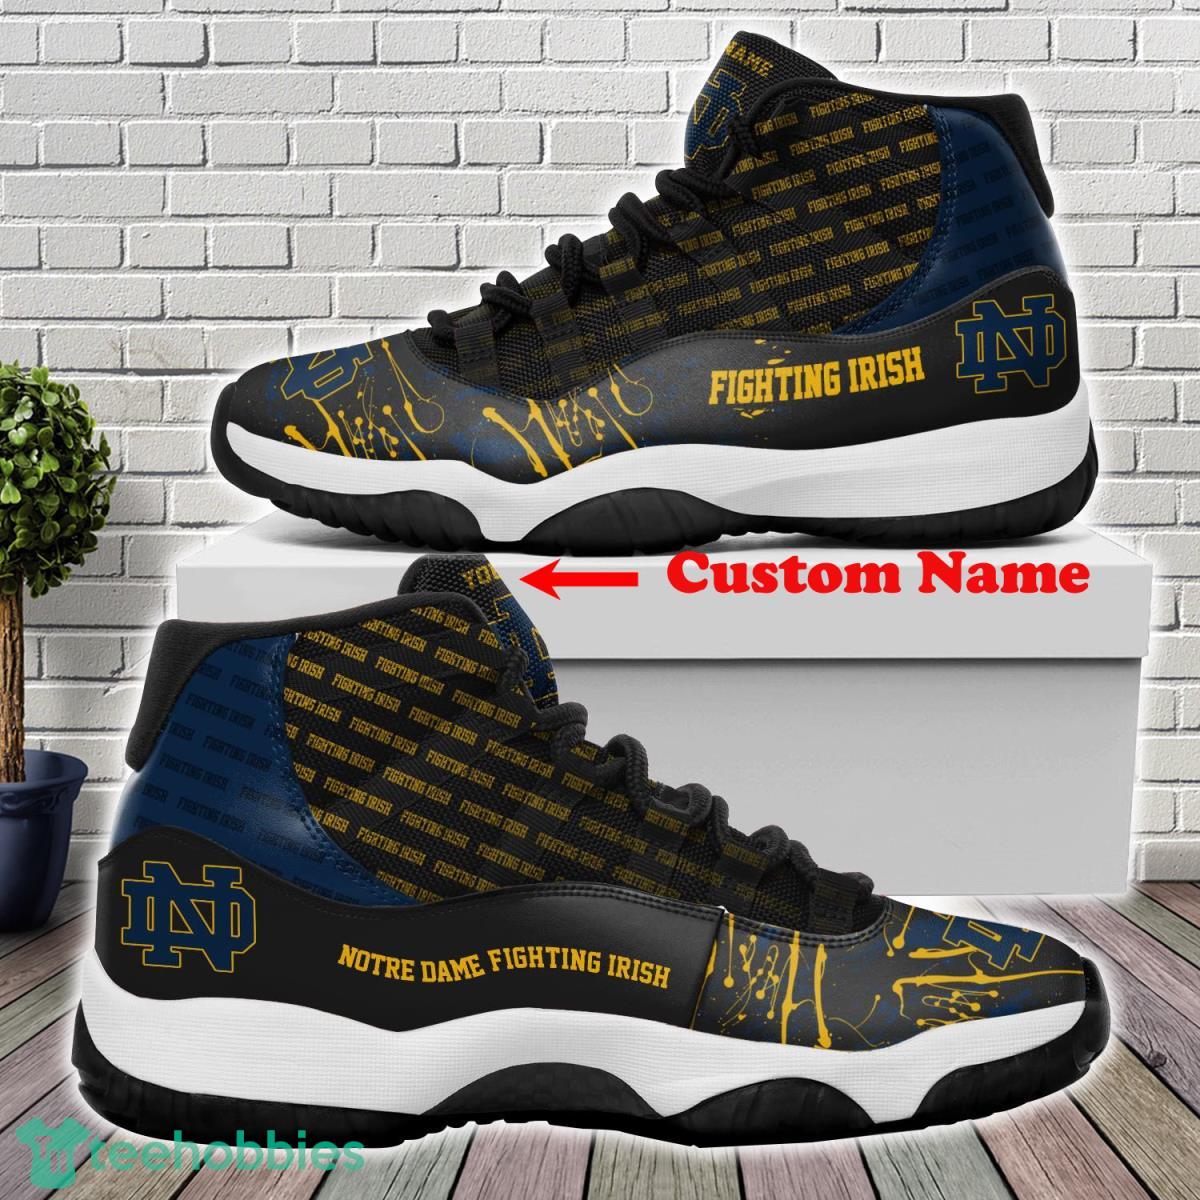 Notre Dame Fighting Irish Custom Name Air Jordan 11 Sneakers For Fans Product Photo 1